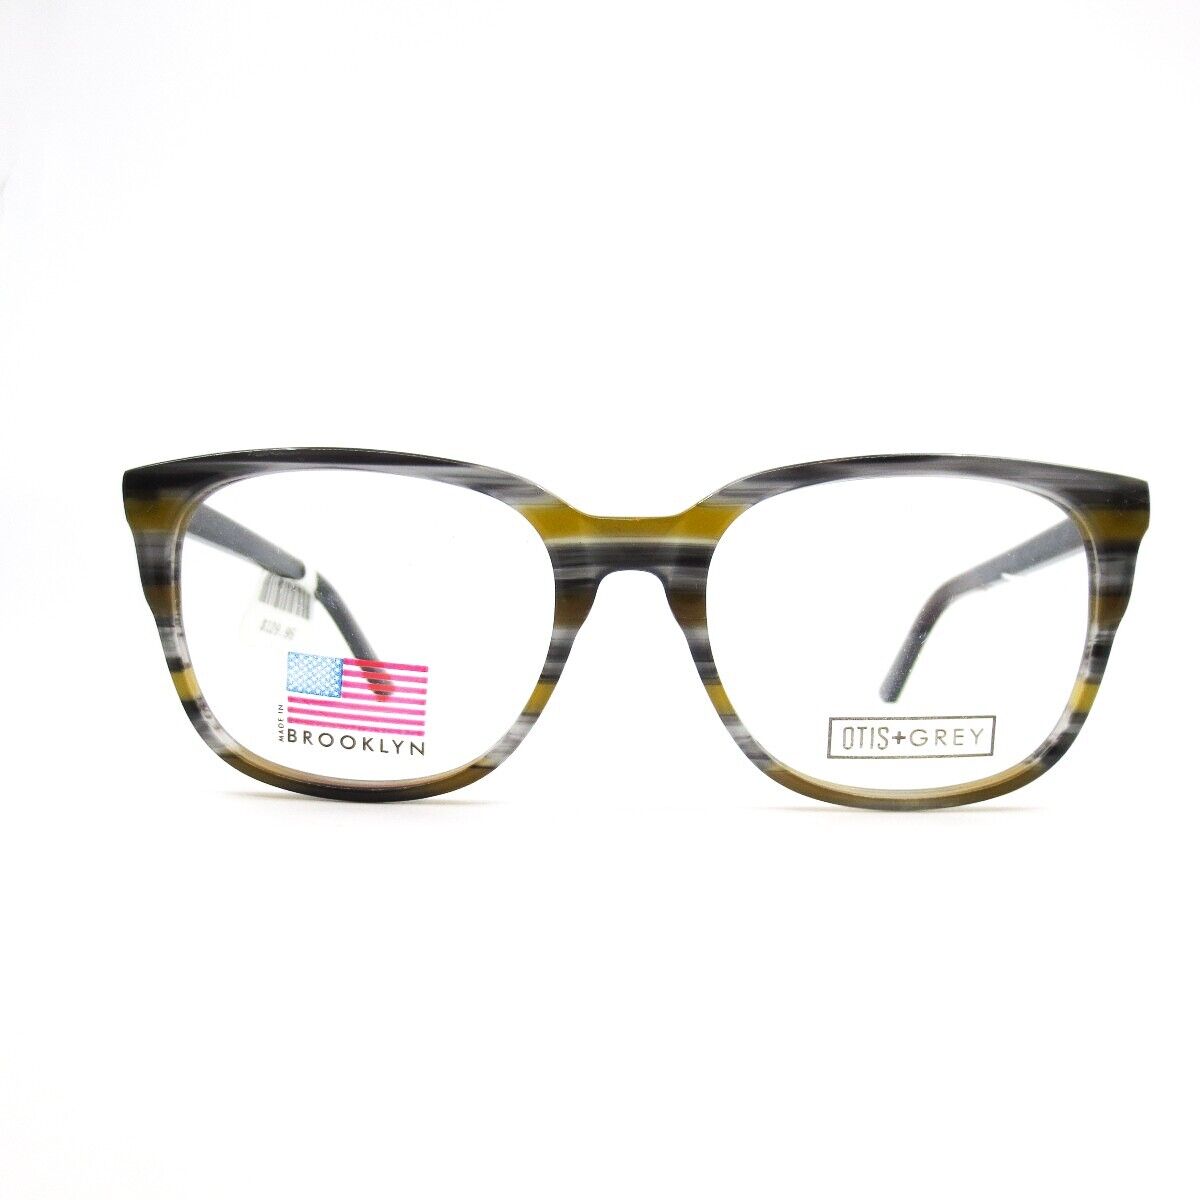 Otis+Grey Eyeglasses Frames OG US 20201 344 Havana Smoke 53-19-145